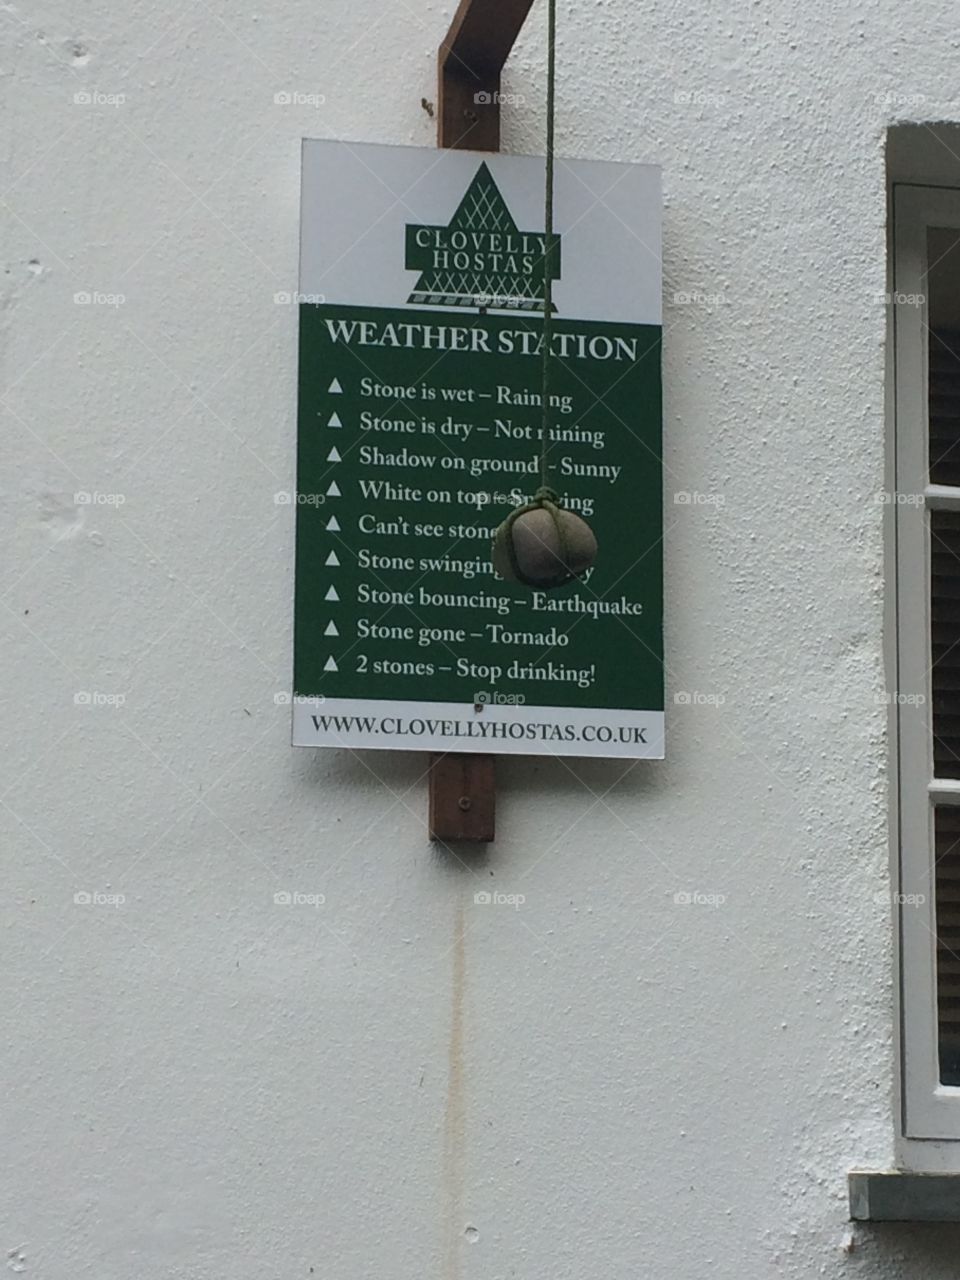 Clovelly weather station 😊